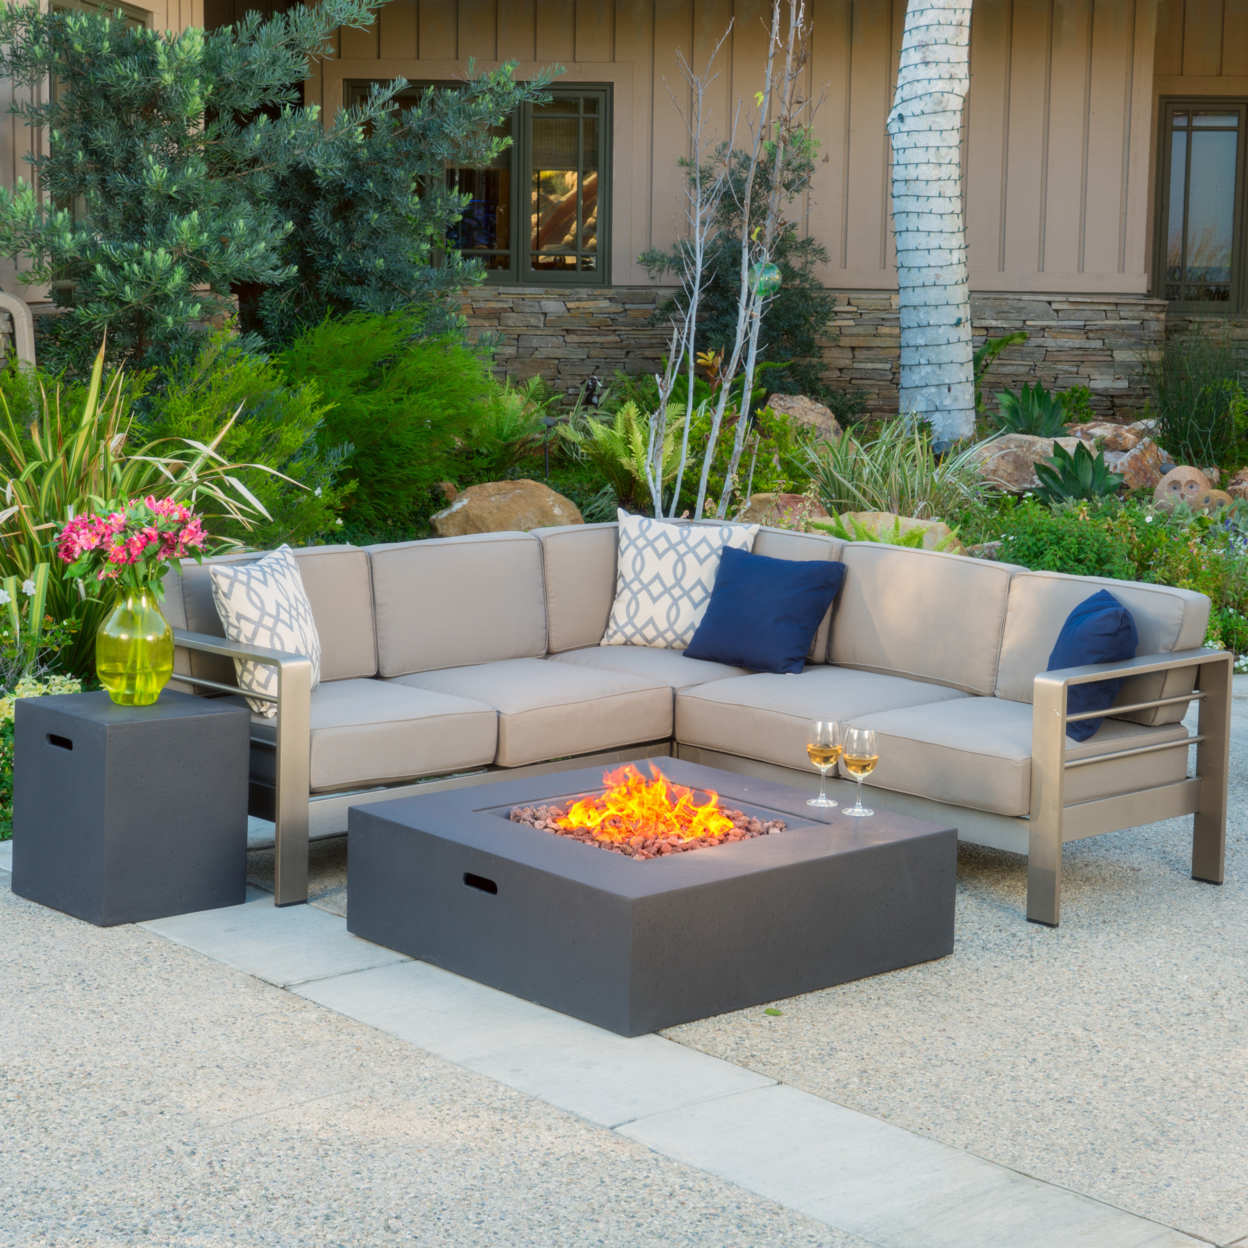 Crested-Bay V-shape Outdoor Fire Table Sofa Set - Dark Grey